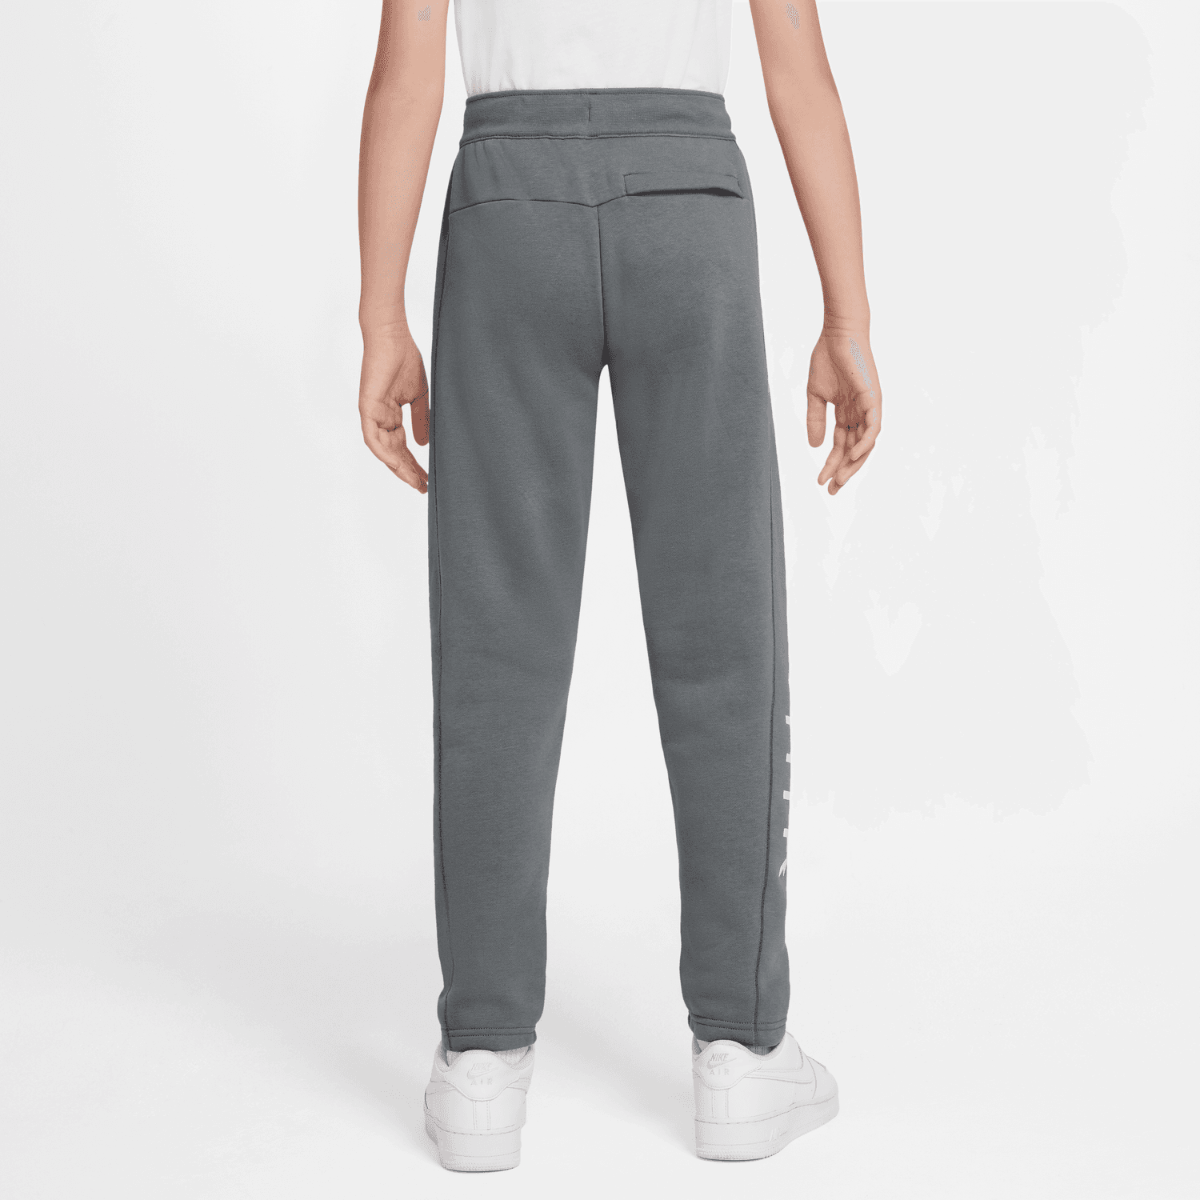 Pantaloni Nike Air Junior - Grigio/Bianco